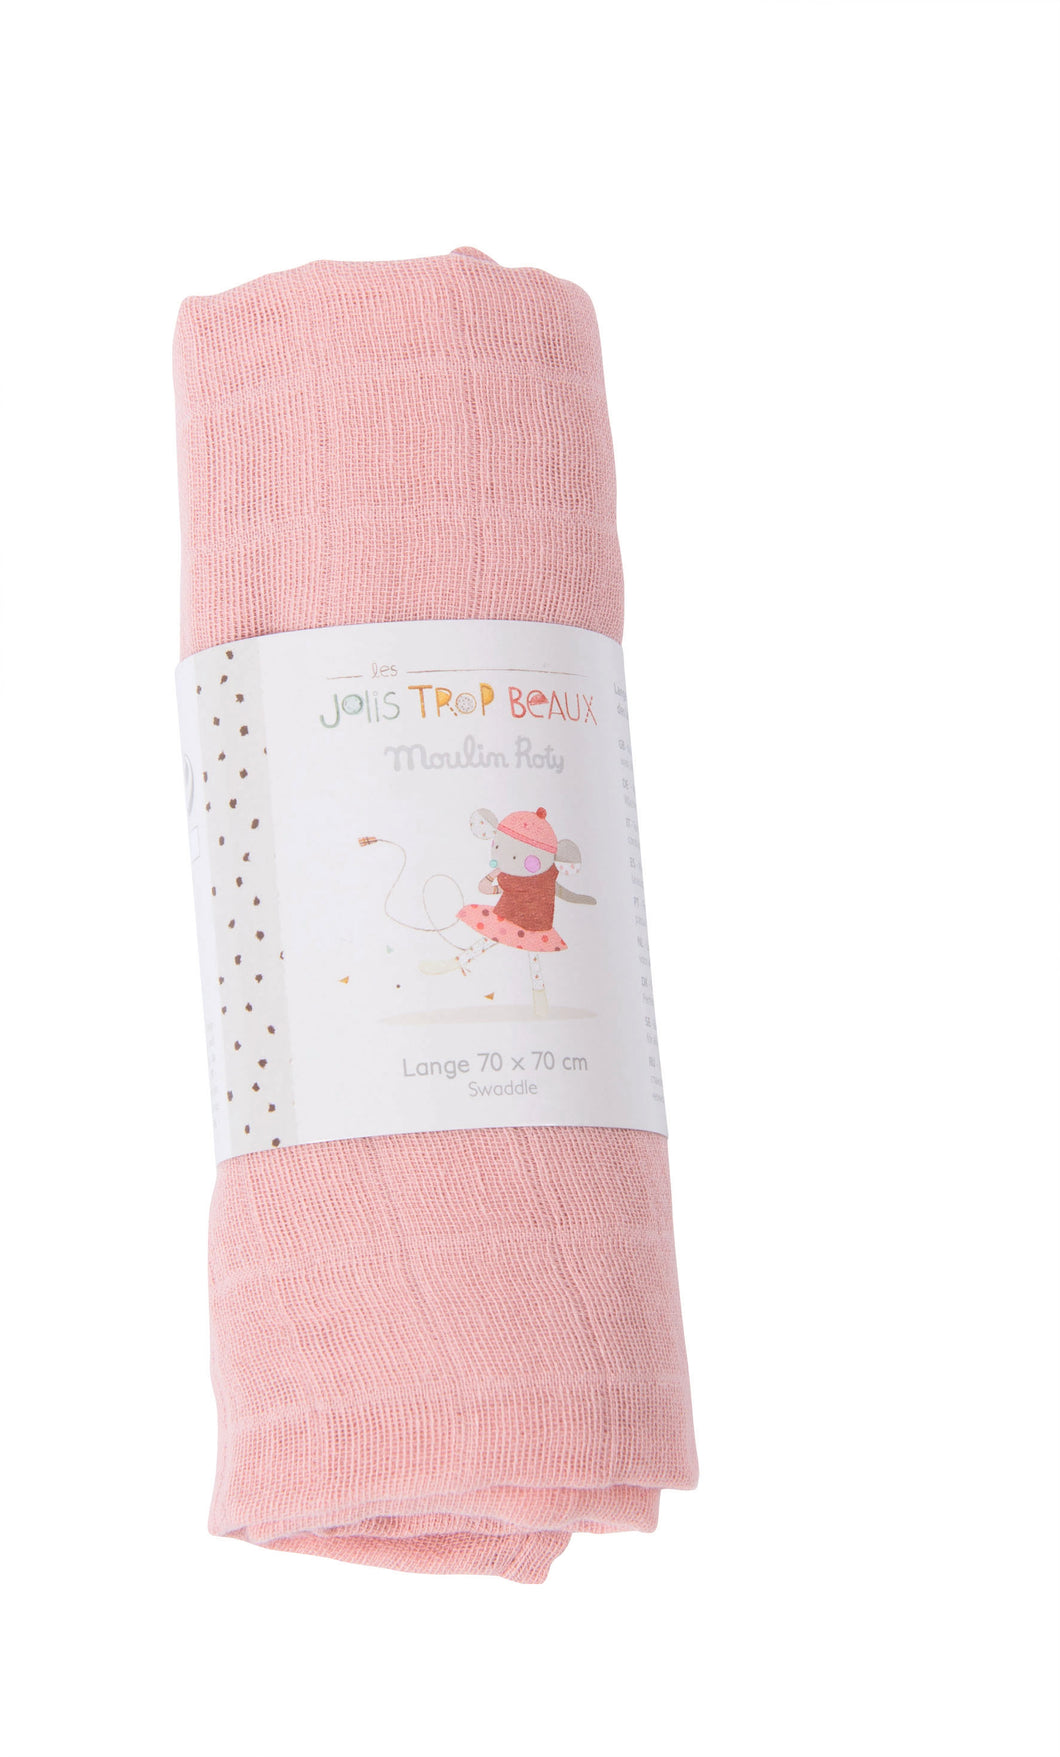 Moulin Roty Pink Muslin Cloth 70x70cm - The Monkey Box